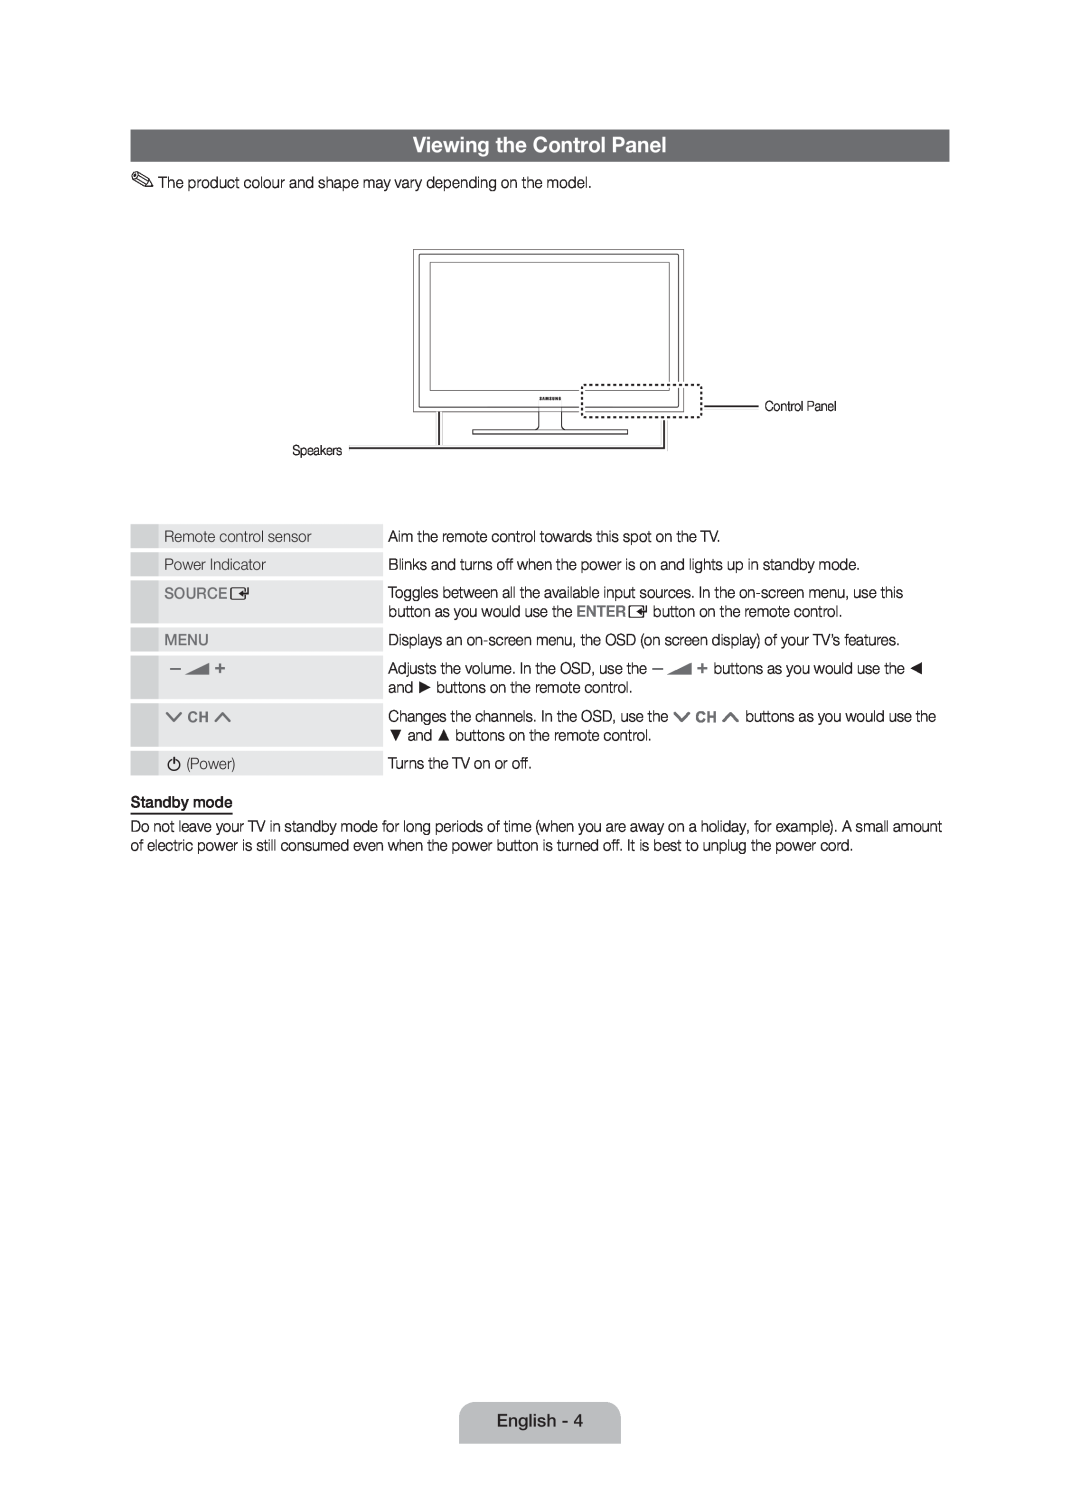 Samsung UE37D5000PWXZG, UE32D5000PWXZG, UE40D5000PWXZT, UE40D5000PWXZG manual Viewing the Control Panel, Source E, Menu 